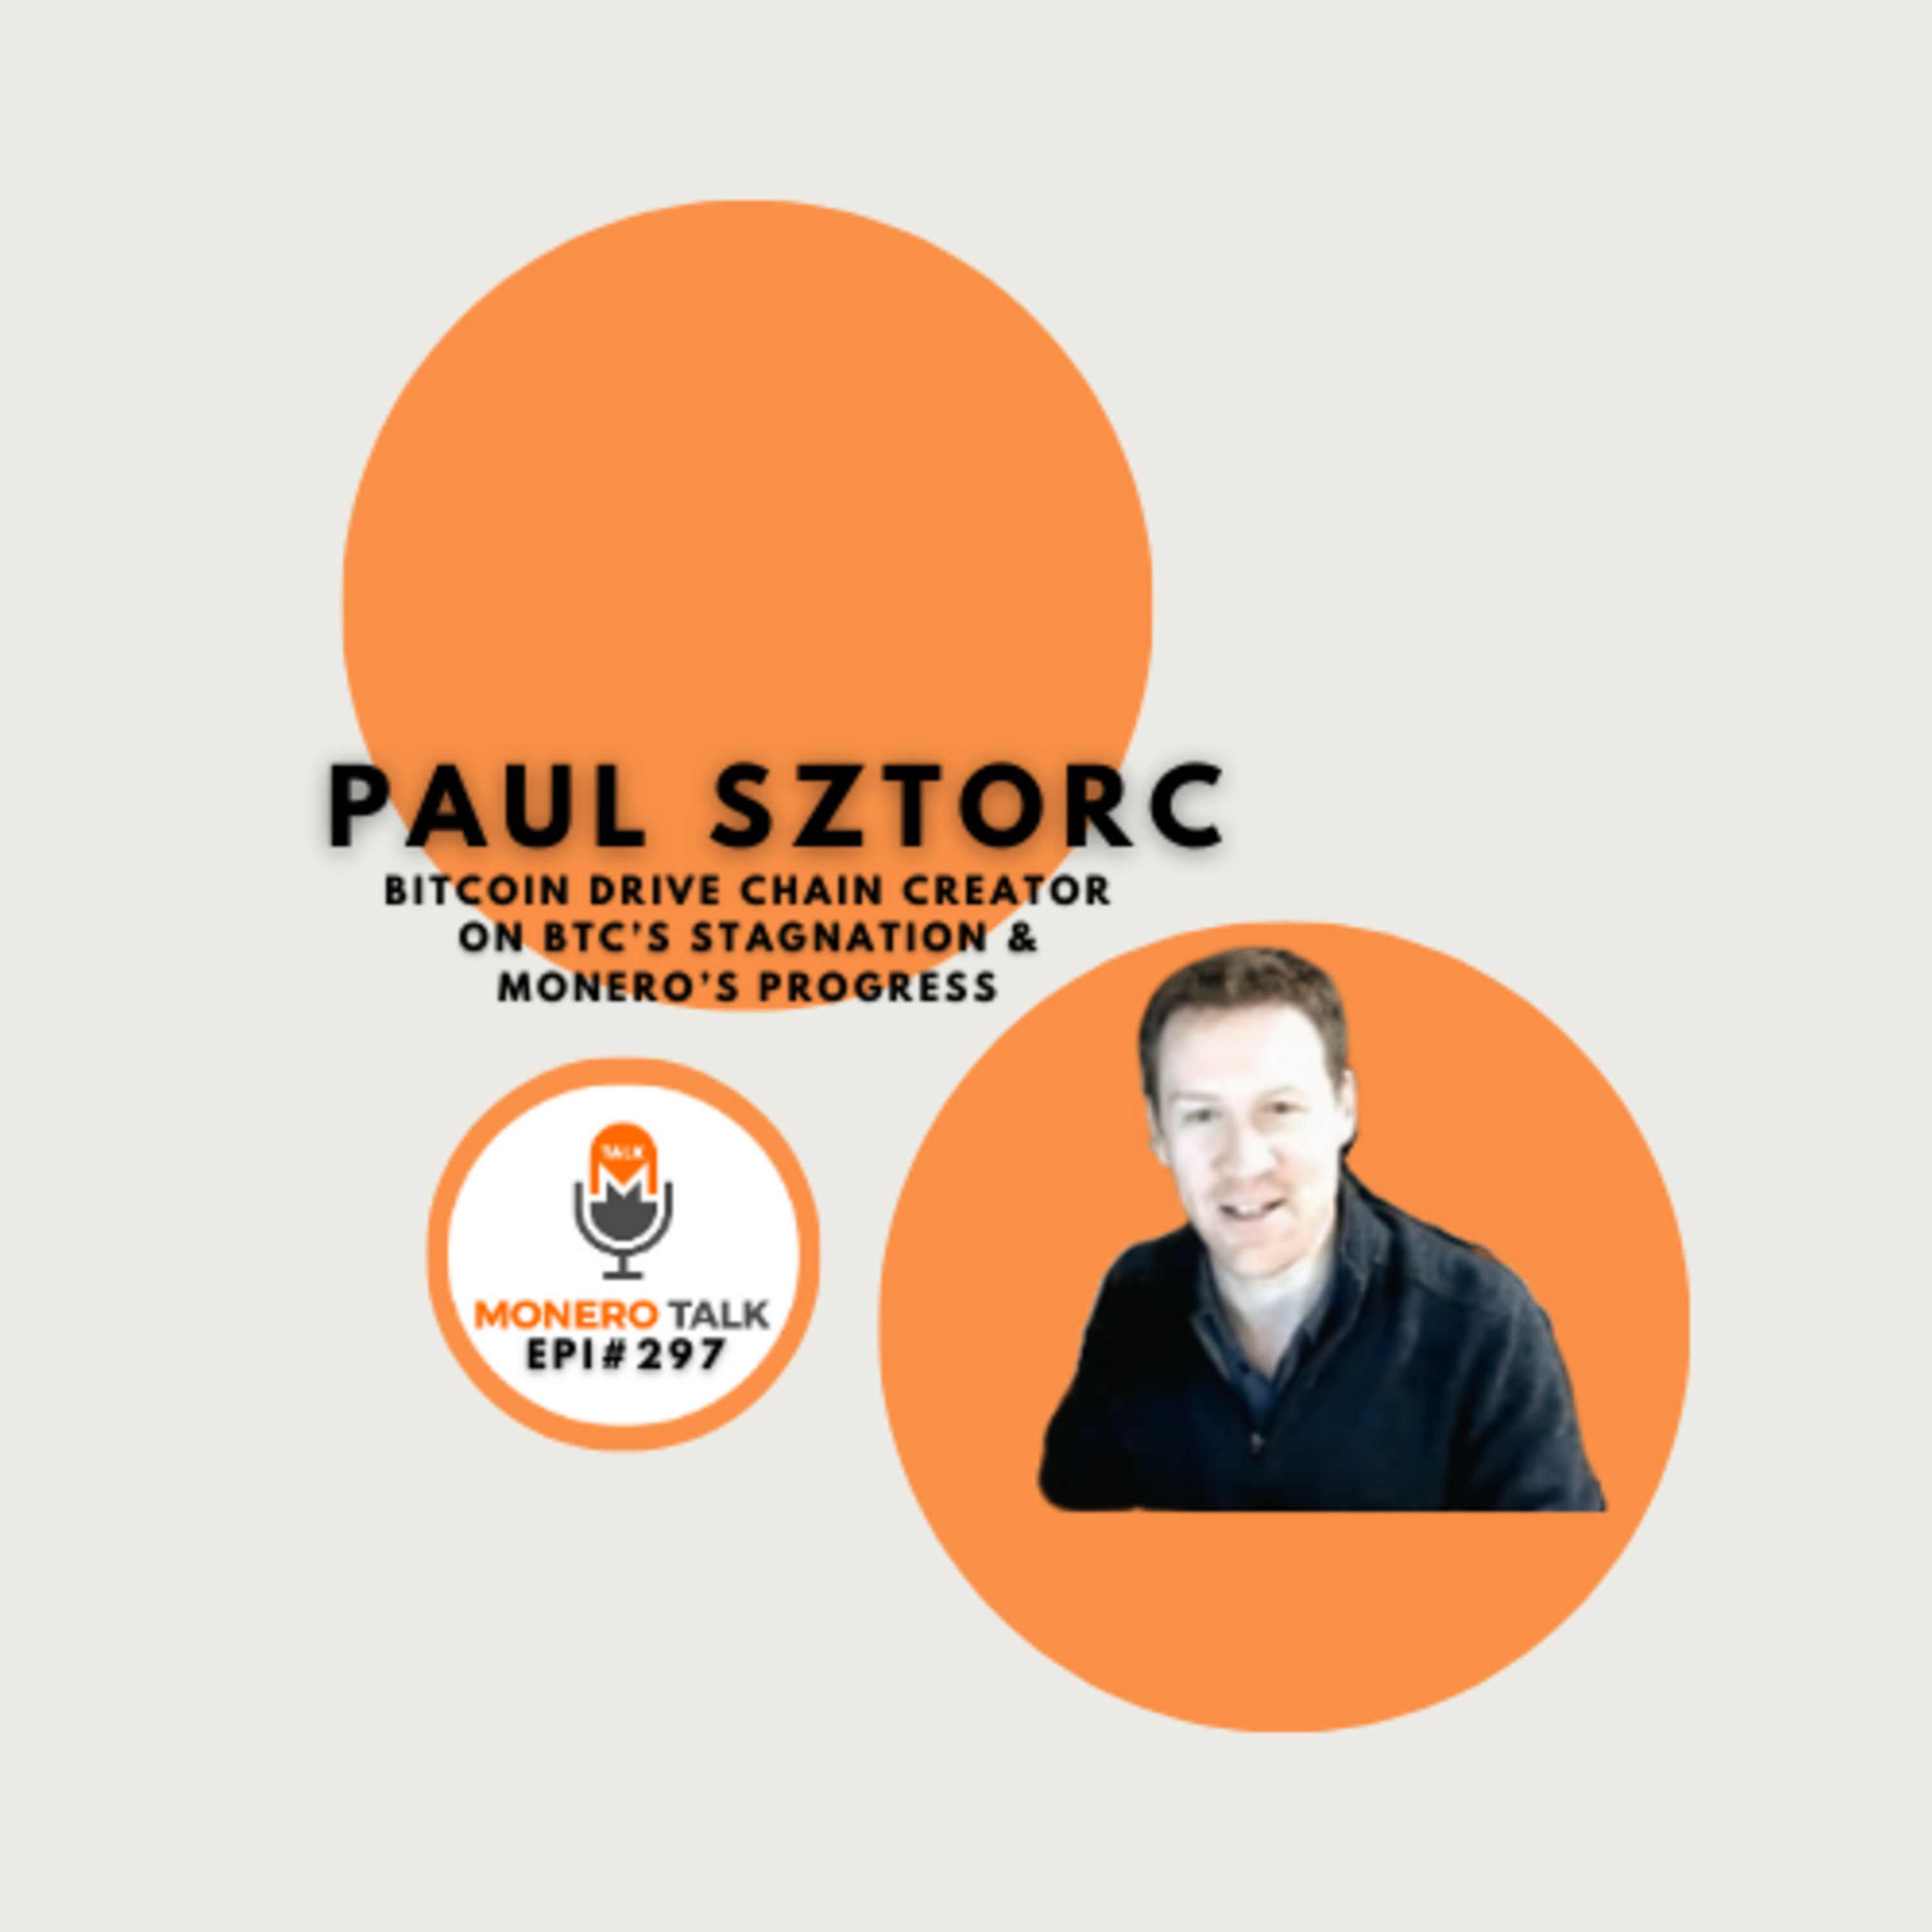 Bitcoin Drive Chain creator Paul Sztorc on BTC’s stagnation & Monero’s progress | EPI #297